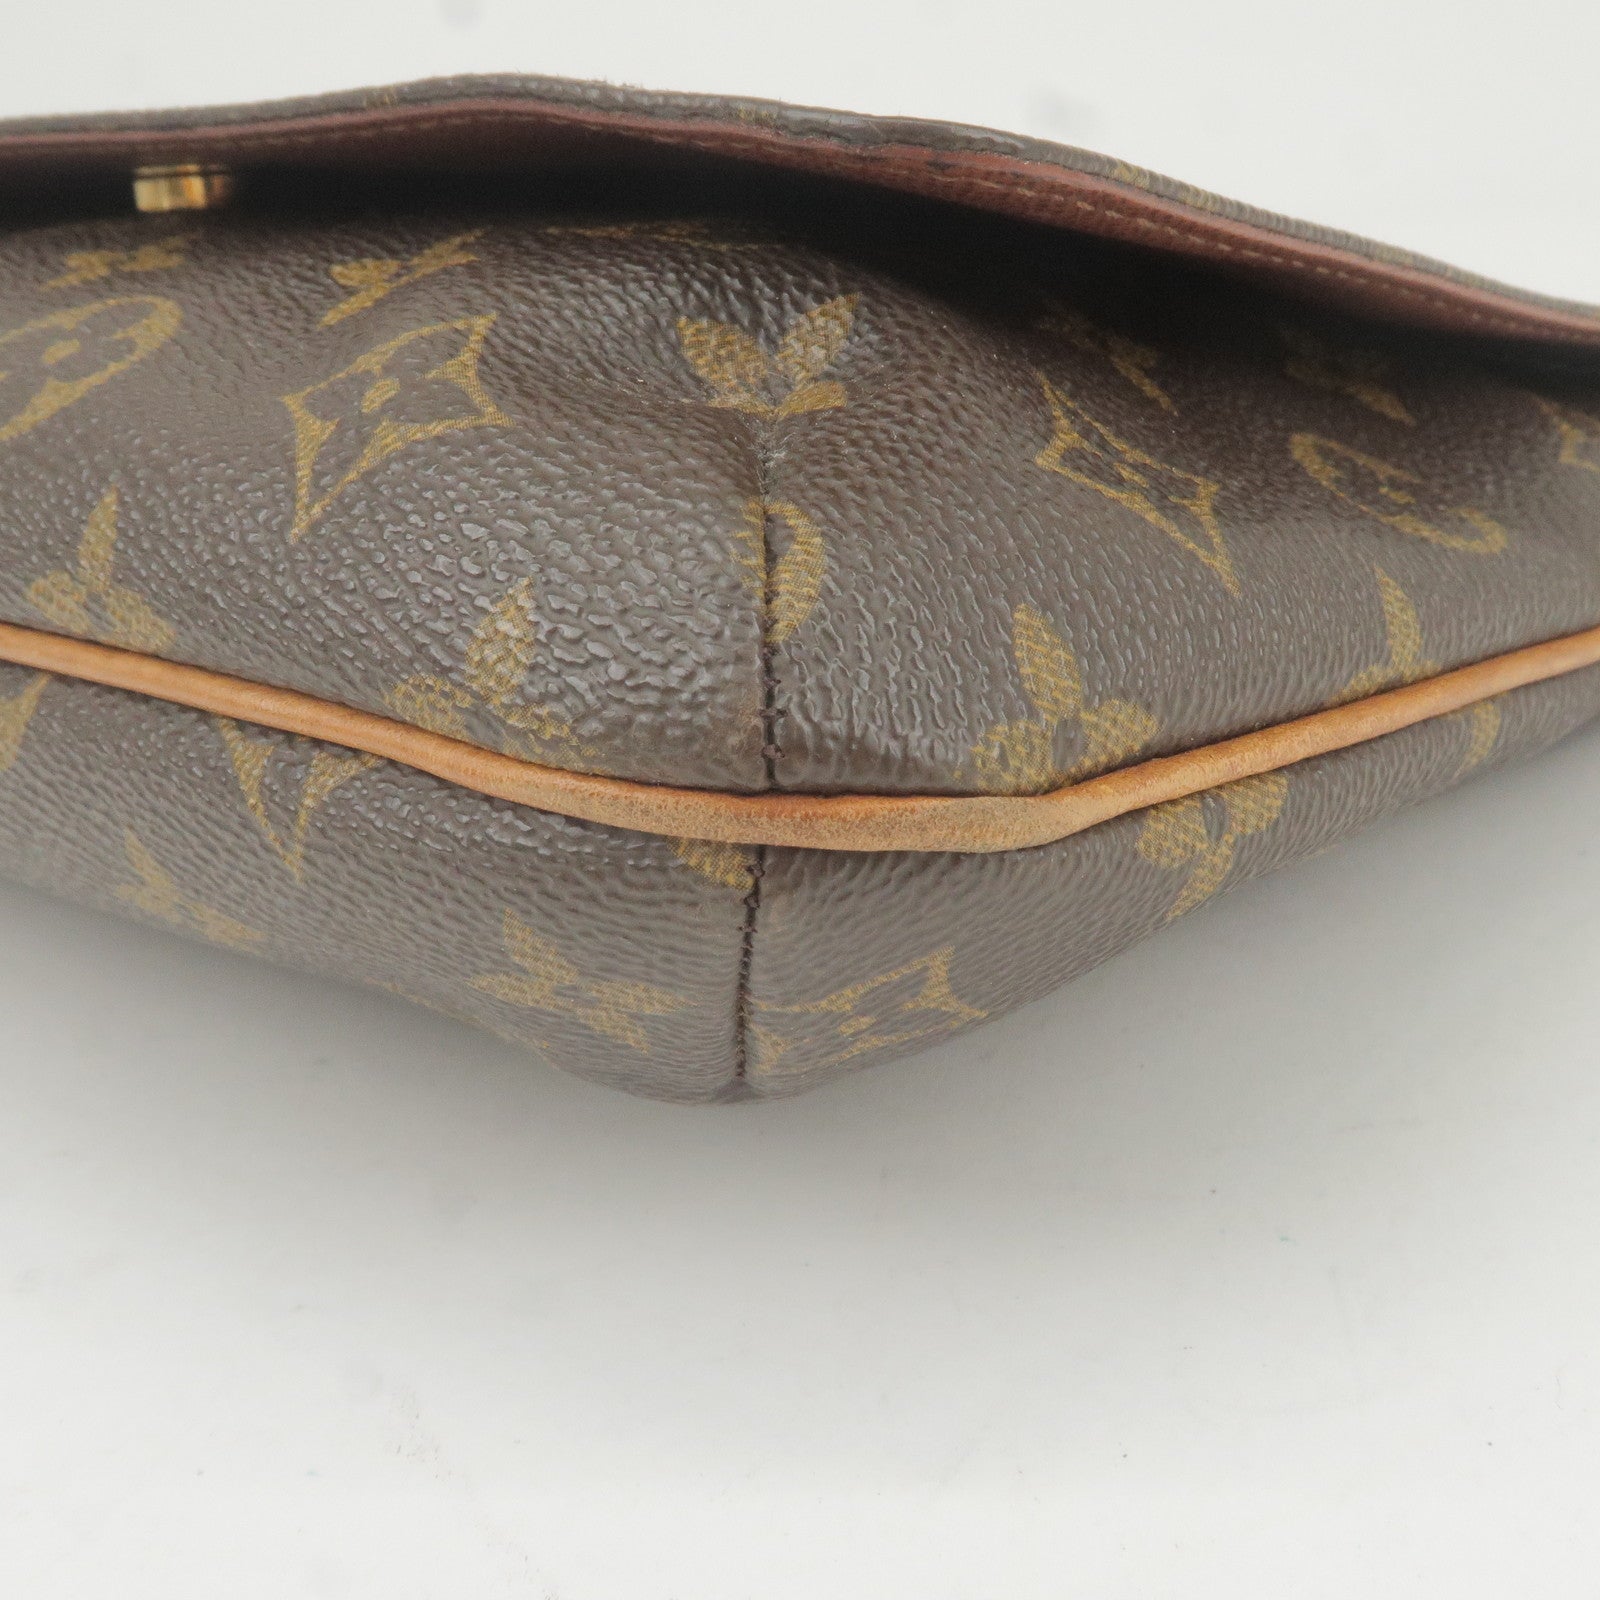 Louis Vuitton Women's Pre-Loved Musette Tango Short Bag, Brown, One Size:  Handbags